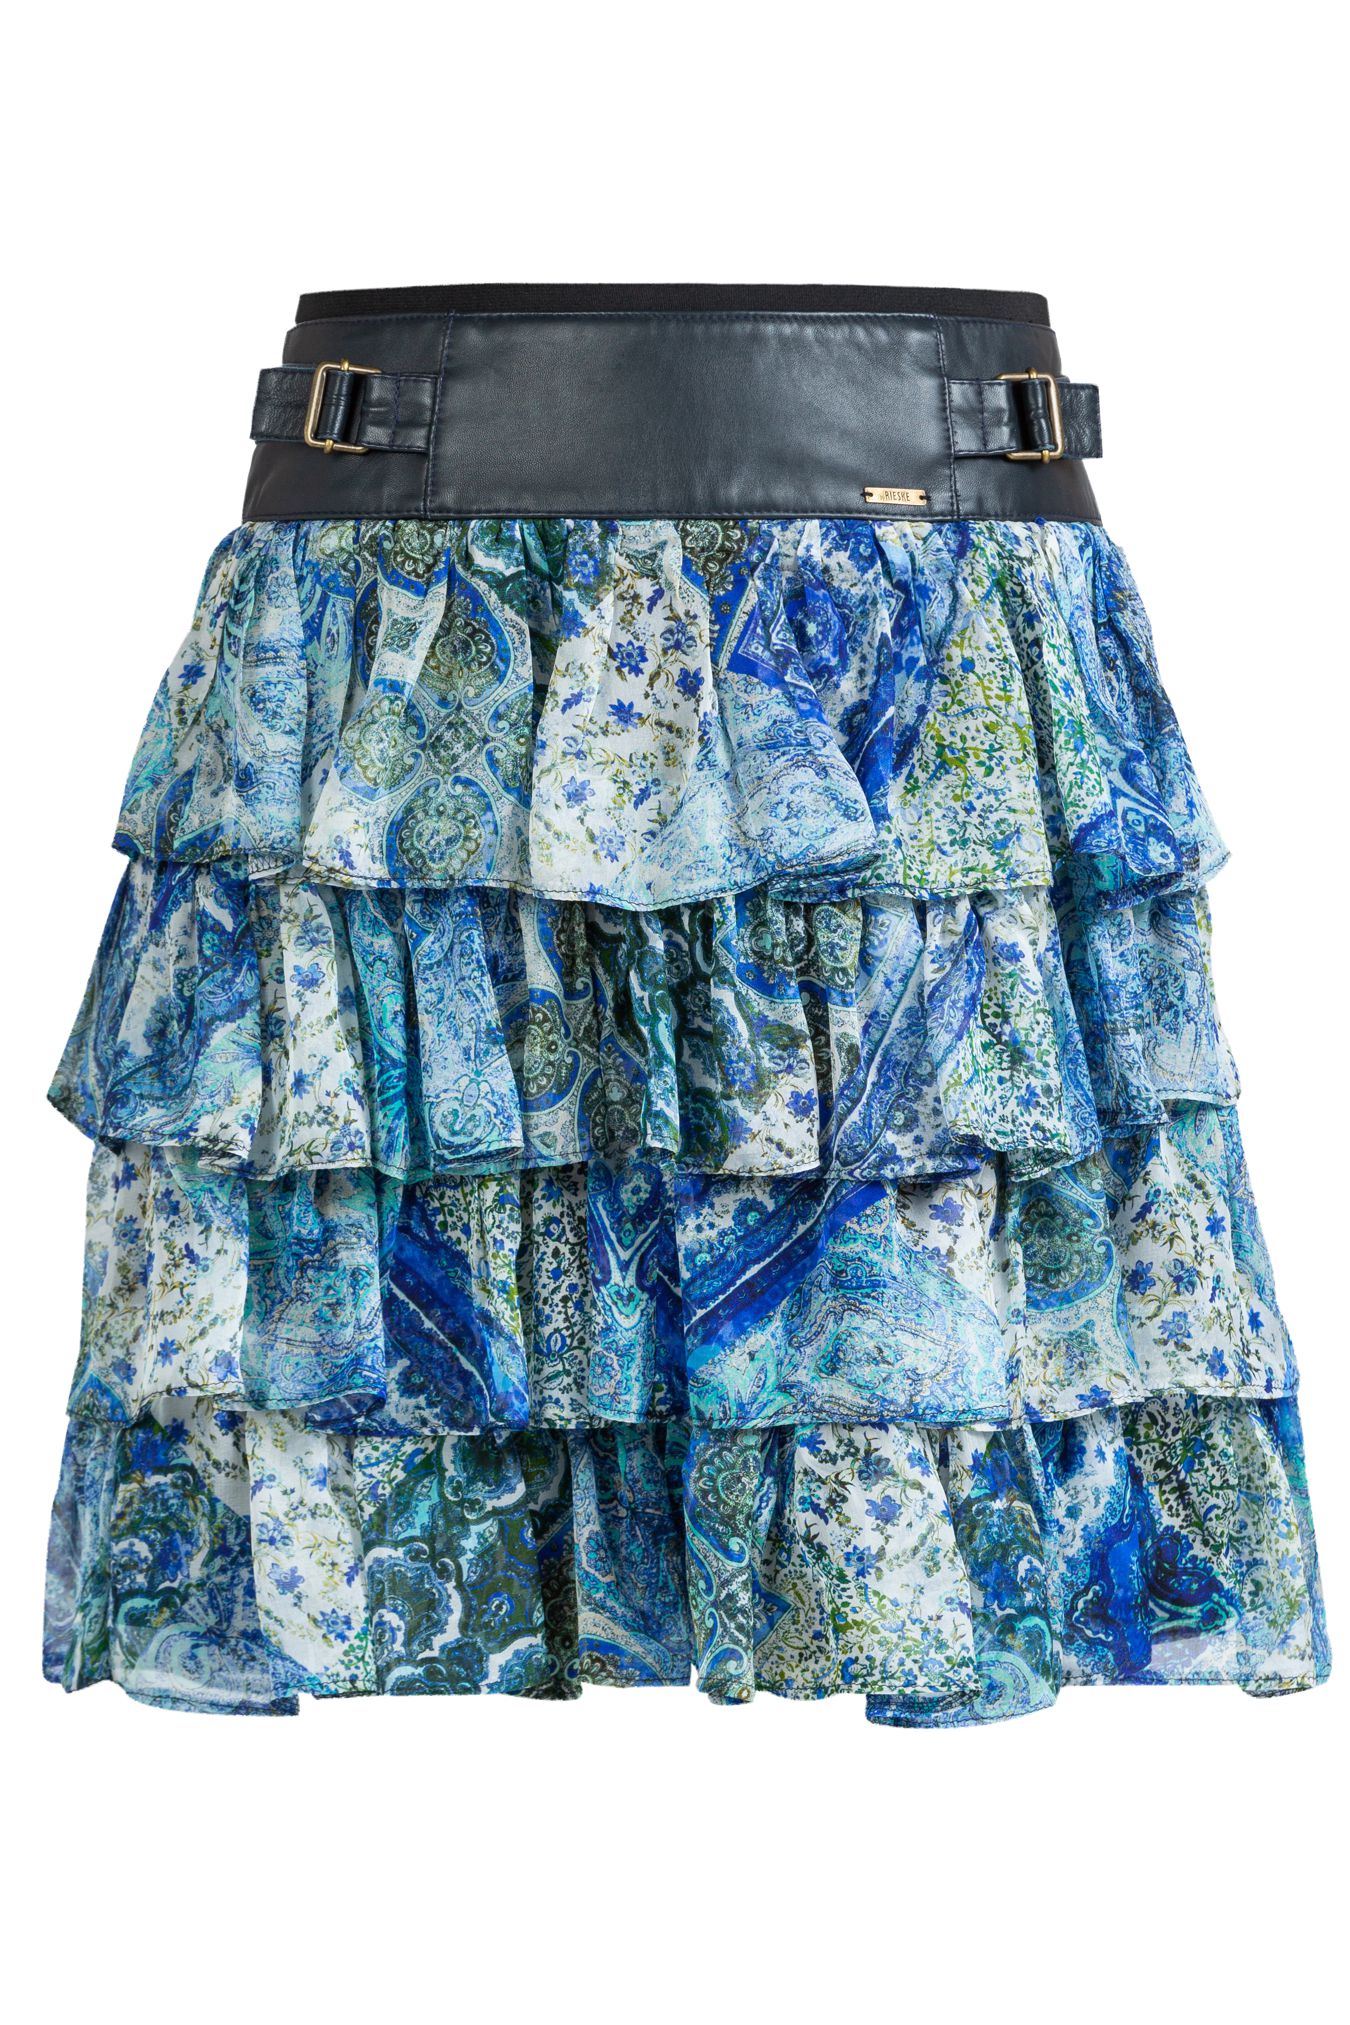 silk skirt with frills and leather yoke, skirt with silk frills, skirt with floral motif, skirt blue silk, silk with leather yoke and silk frills